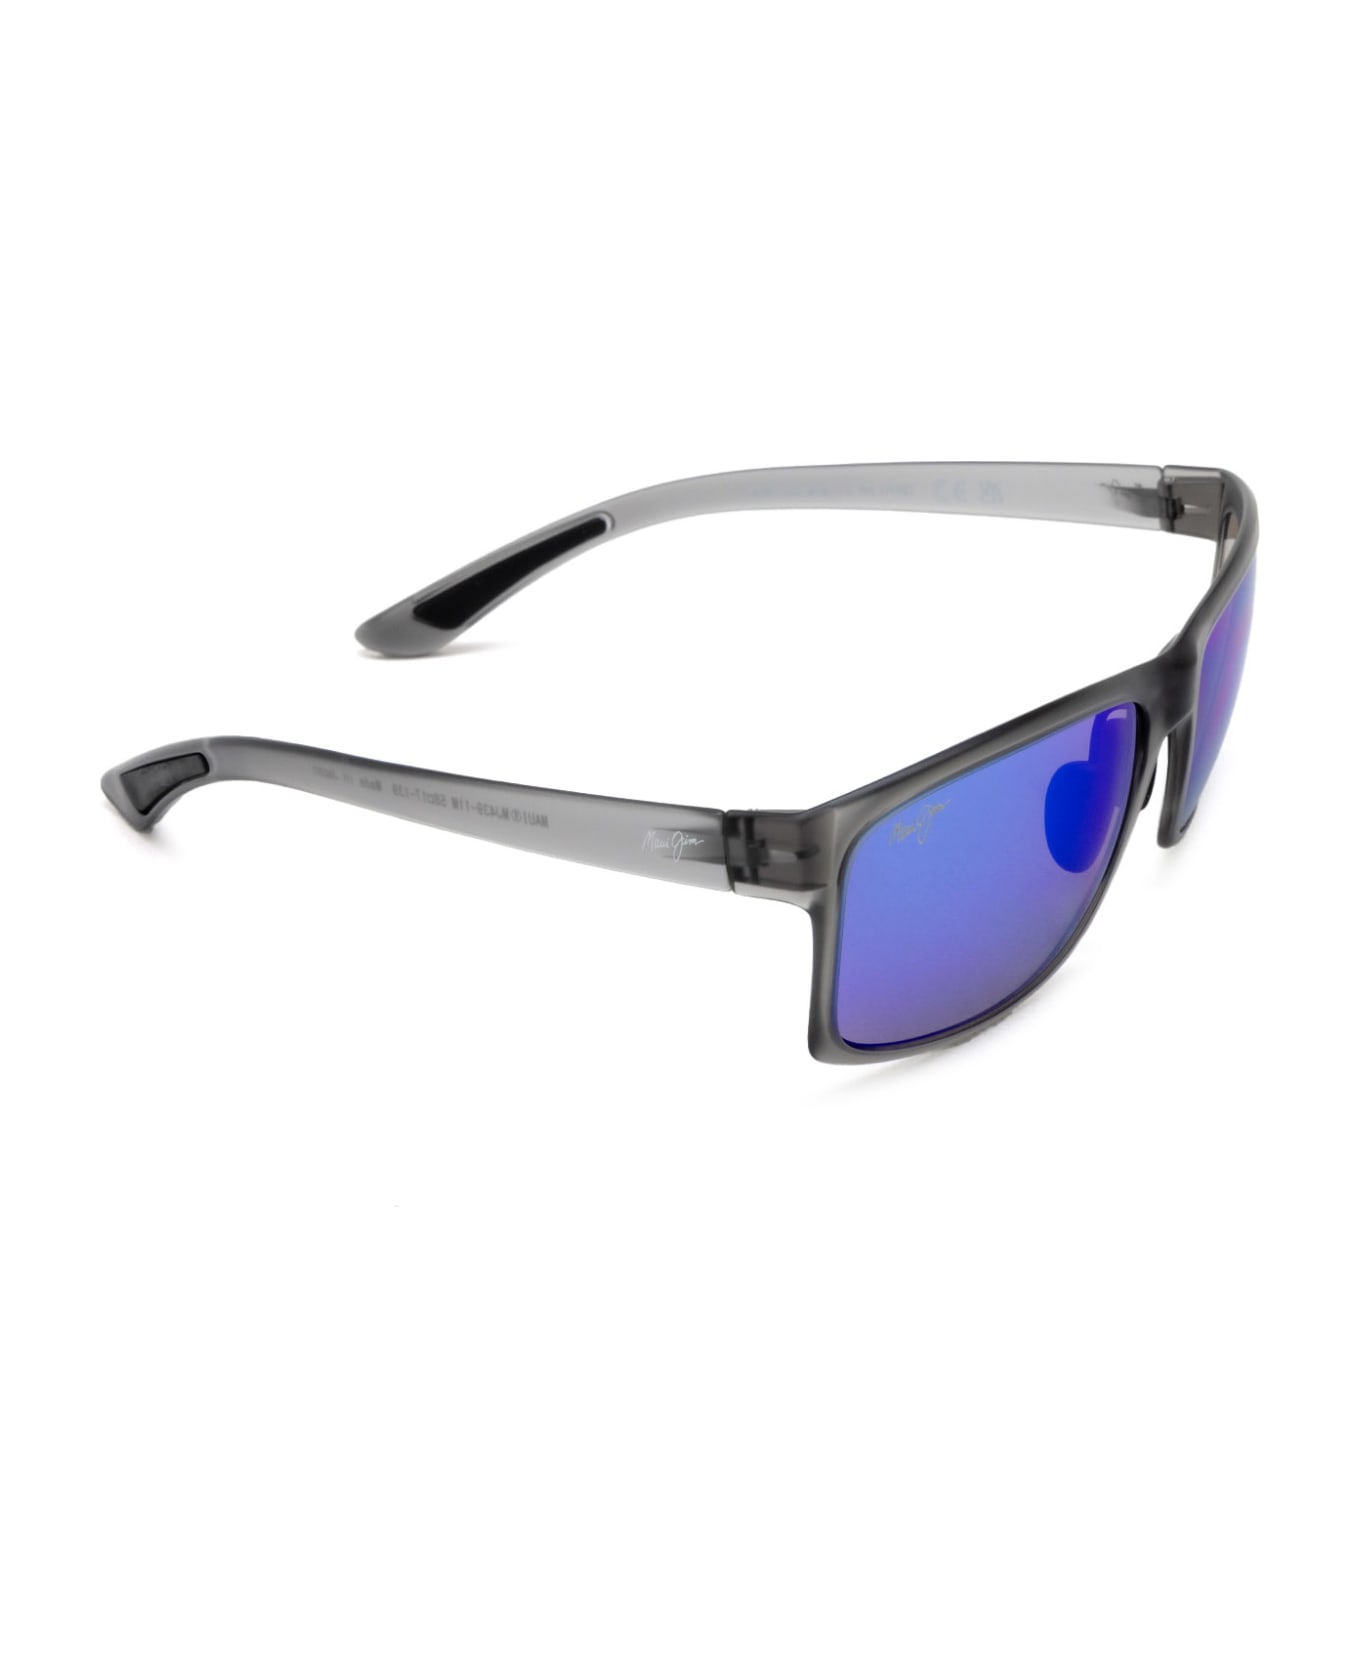 Maui Jim Mj439 Translucent Matte Grey Sunglasses - Translucent Matte Grey